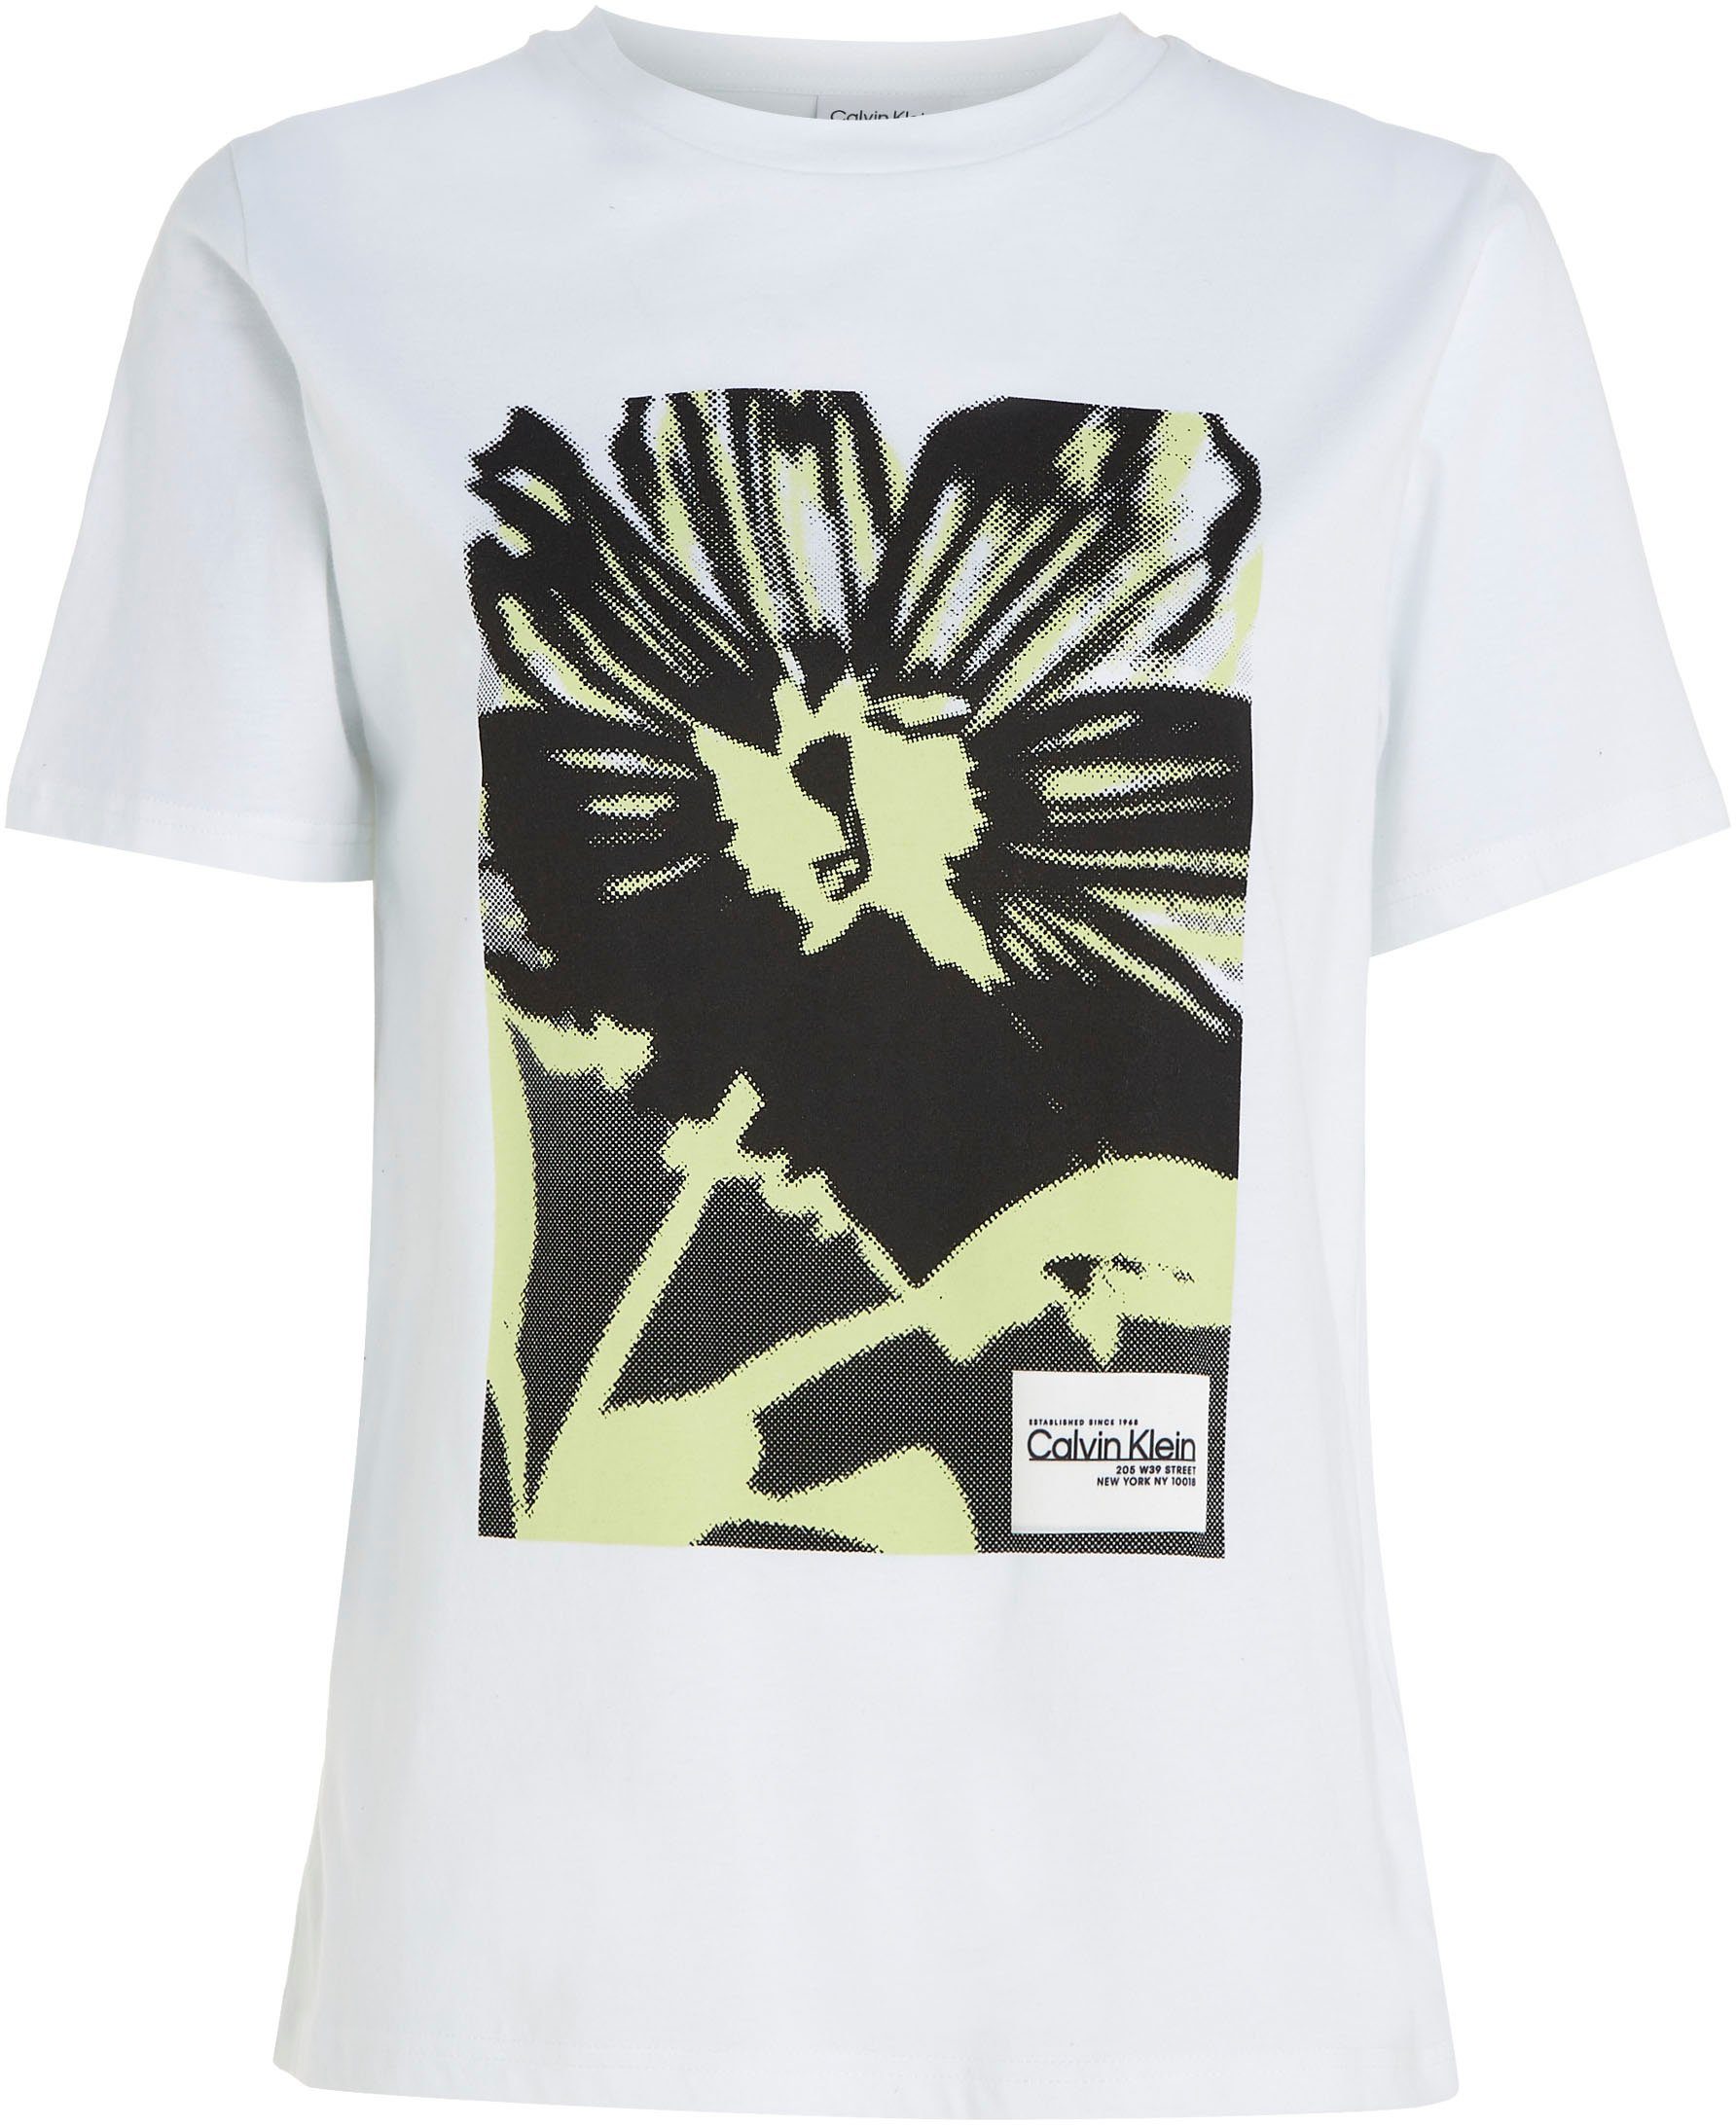 Floral-Printmuster mit T-Shirt Klein Calvin